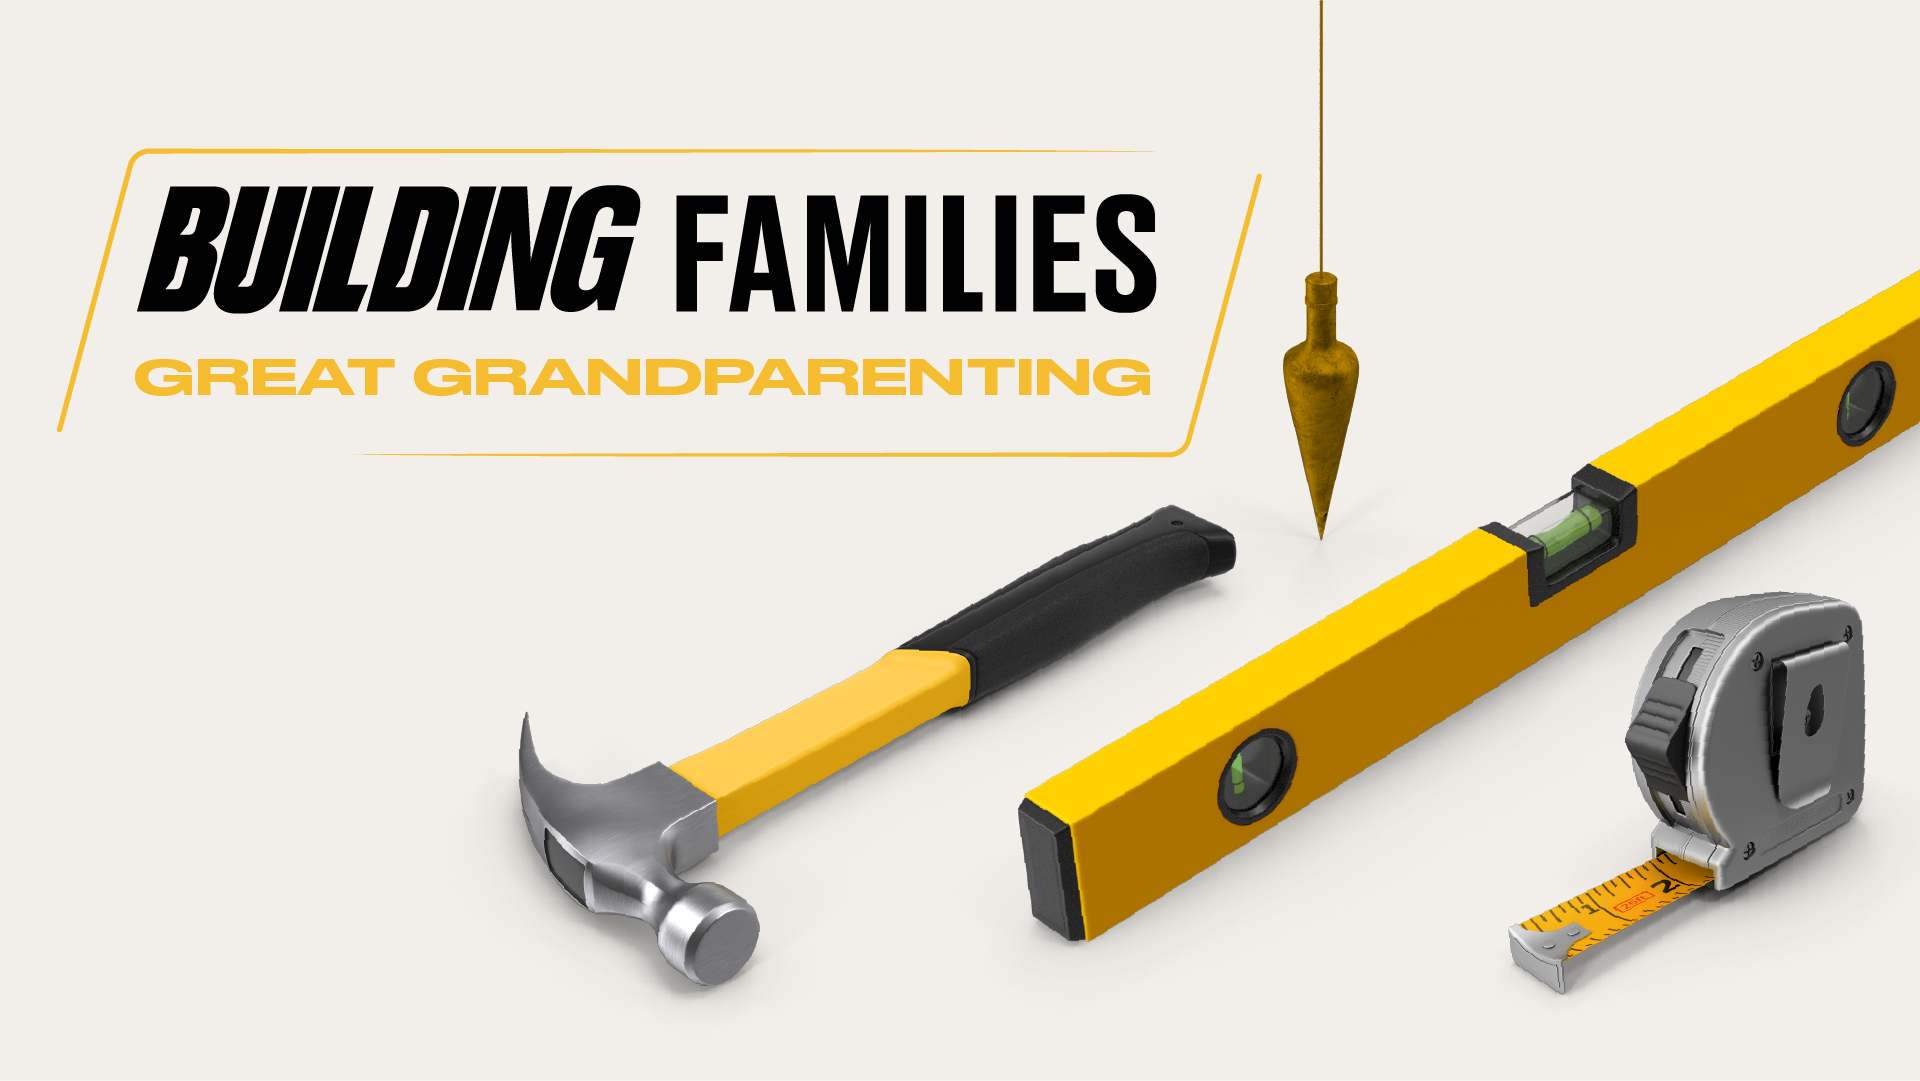 9:30 – Building Families – Grandparenting